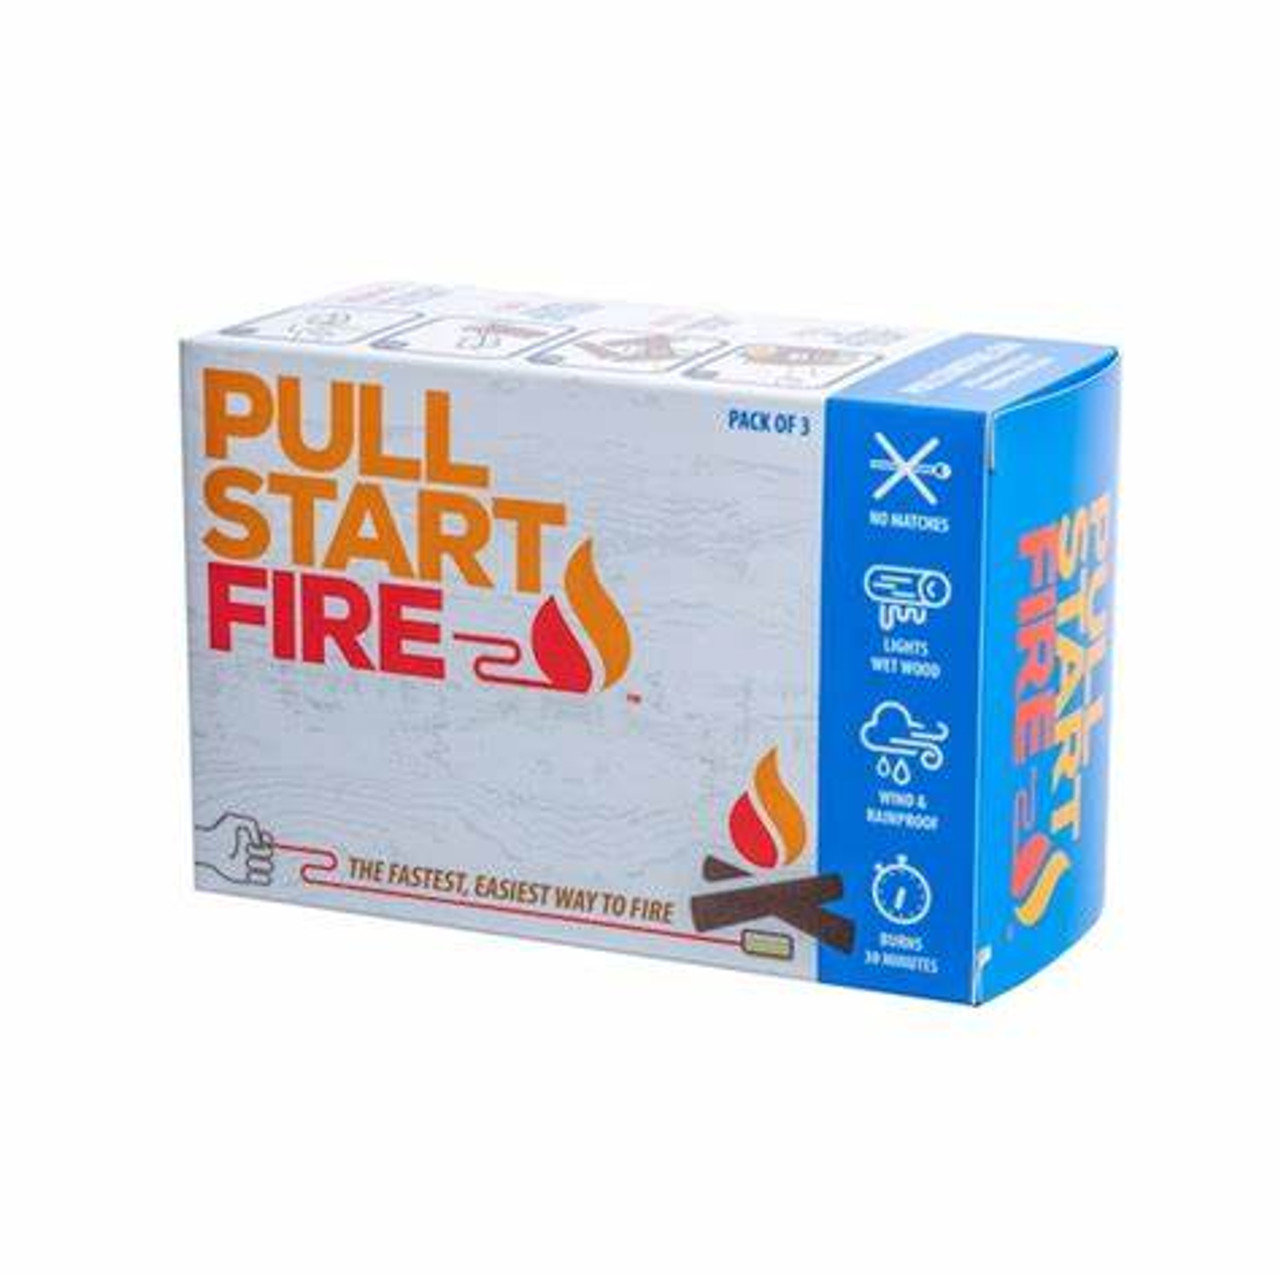 Pull Start Fire Fire Starter, No Matches Needed, Windproof 200 Mph, Burns 30 Min, 3Pack